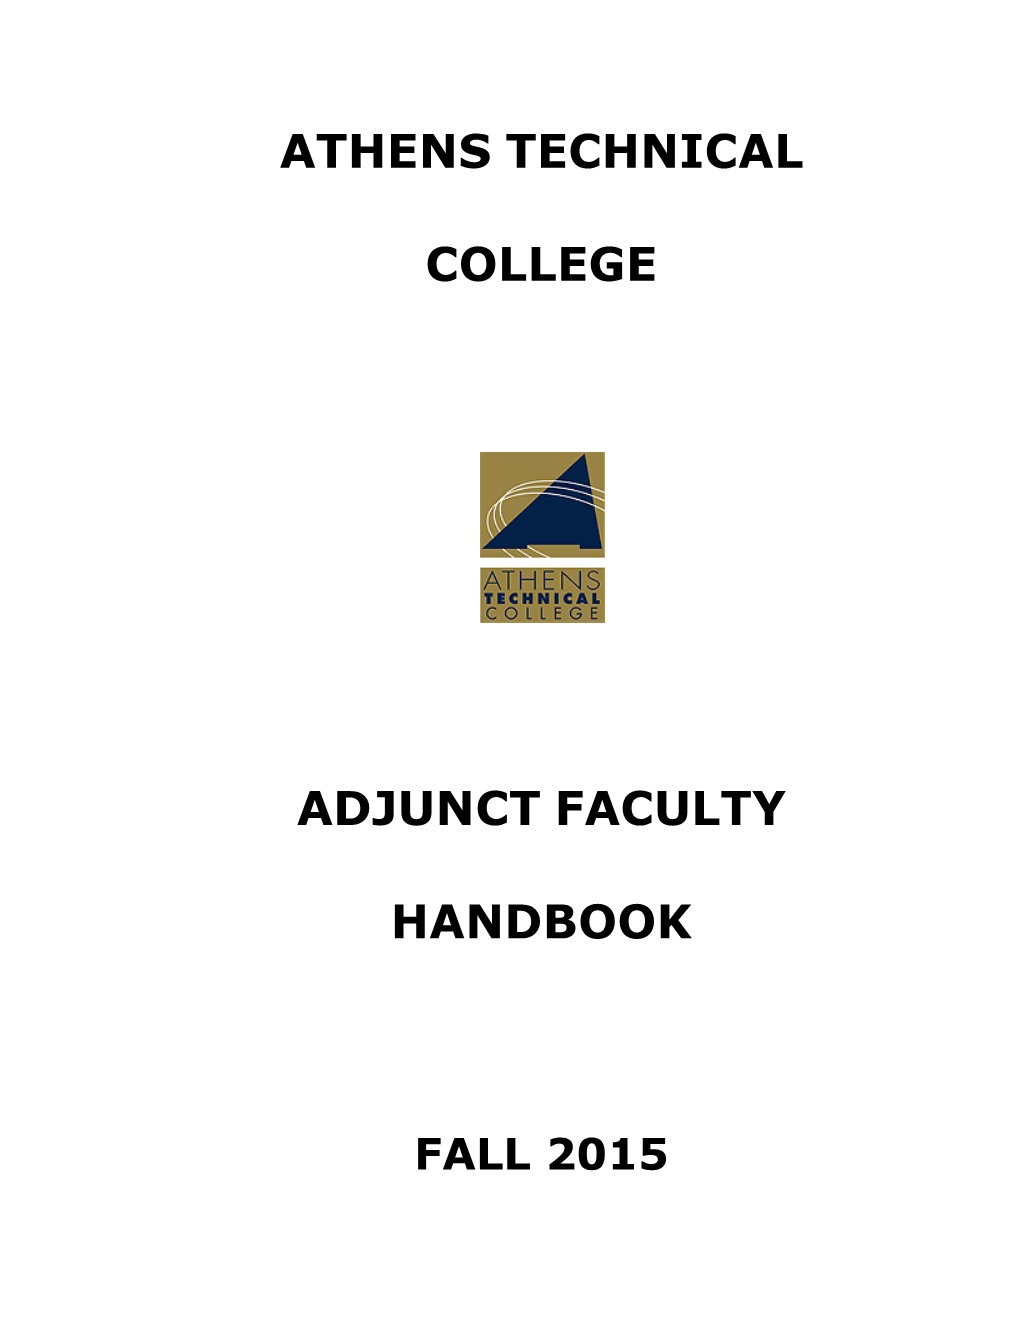 ATC Adjunct Handbook